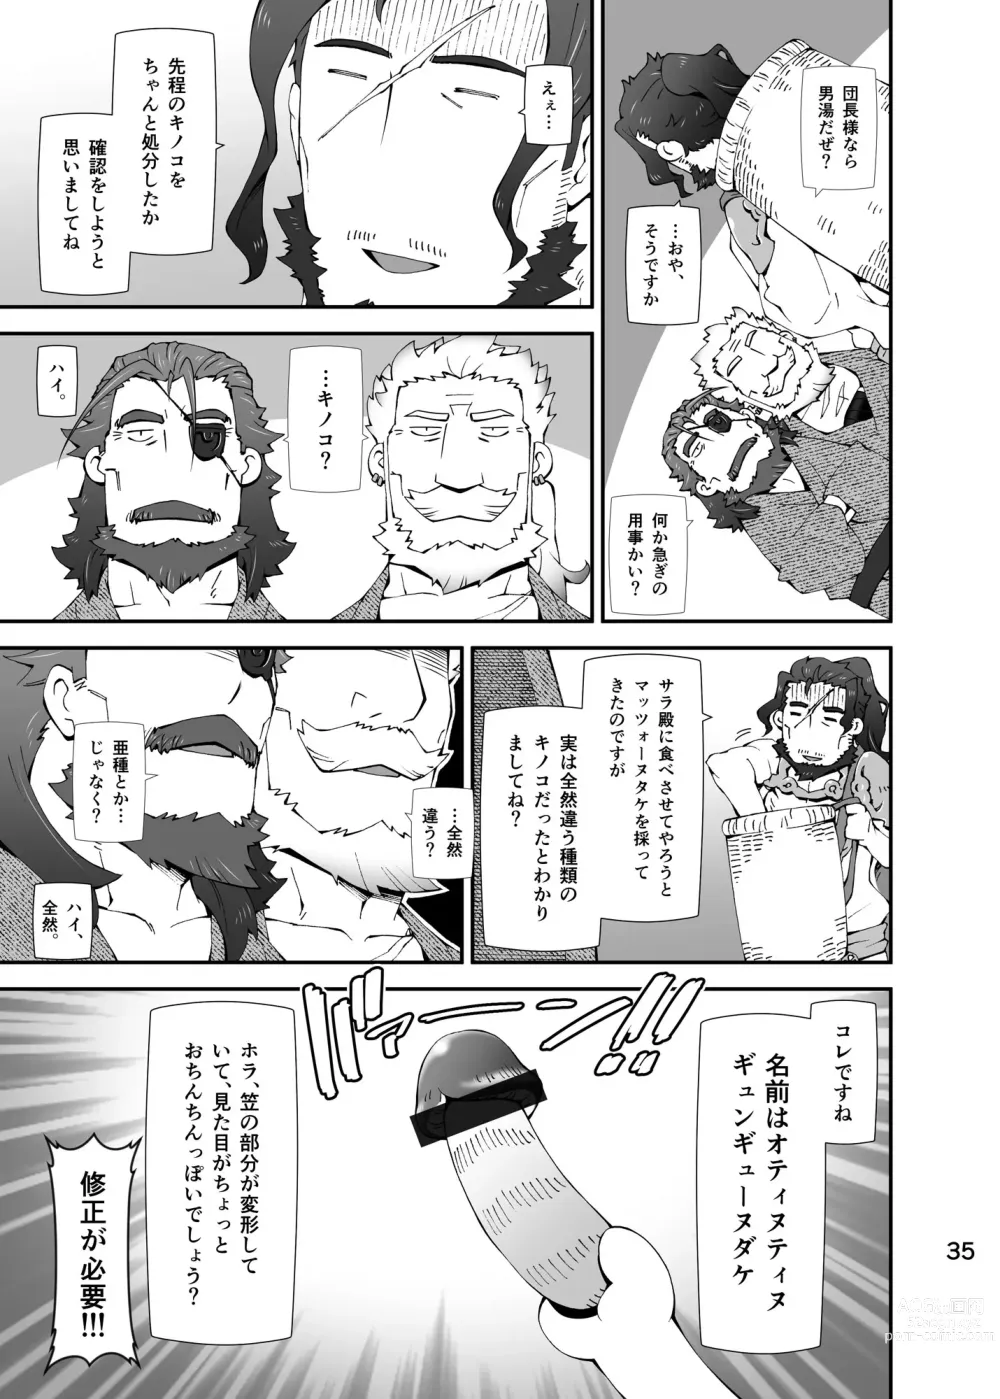 Page 34 of doujinshi GOOD LOVE-RU DARKNESS